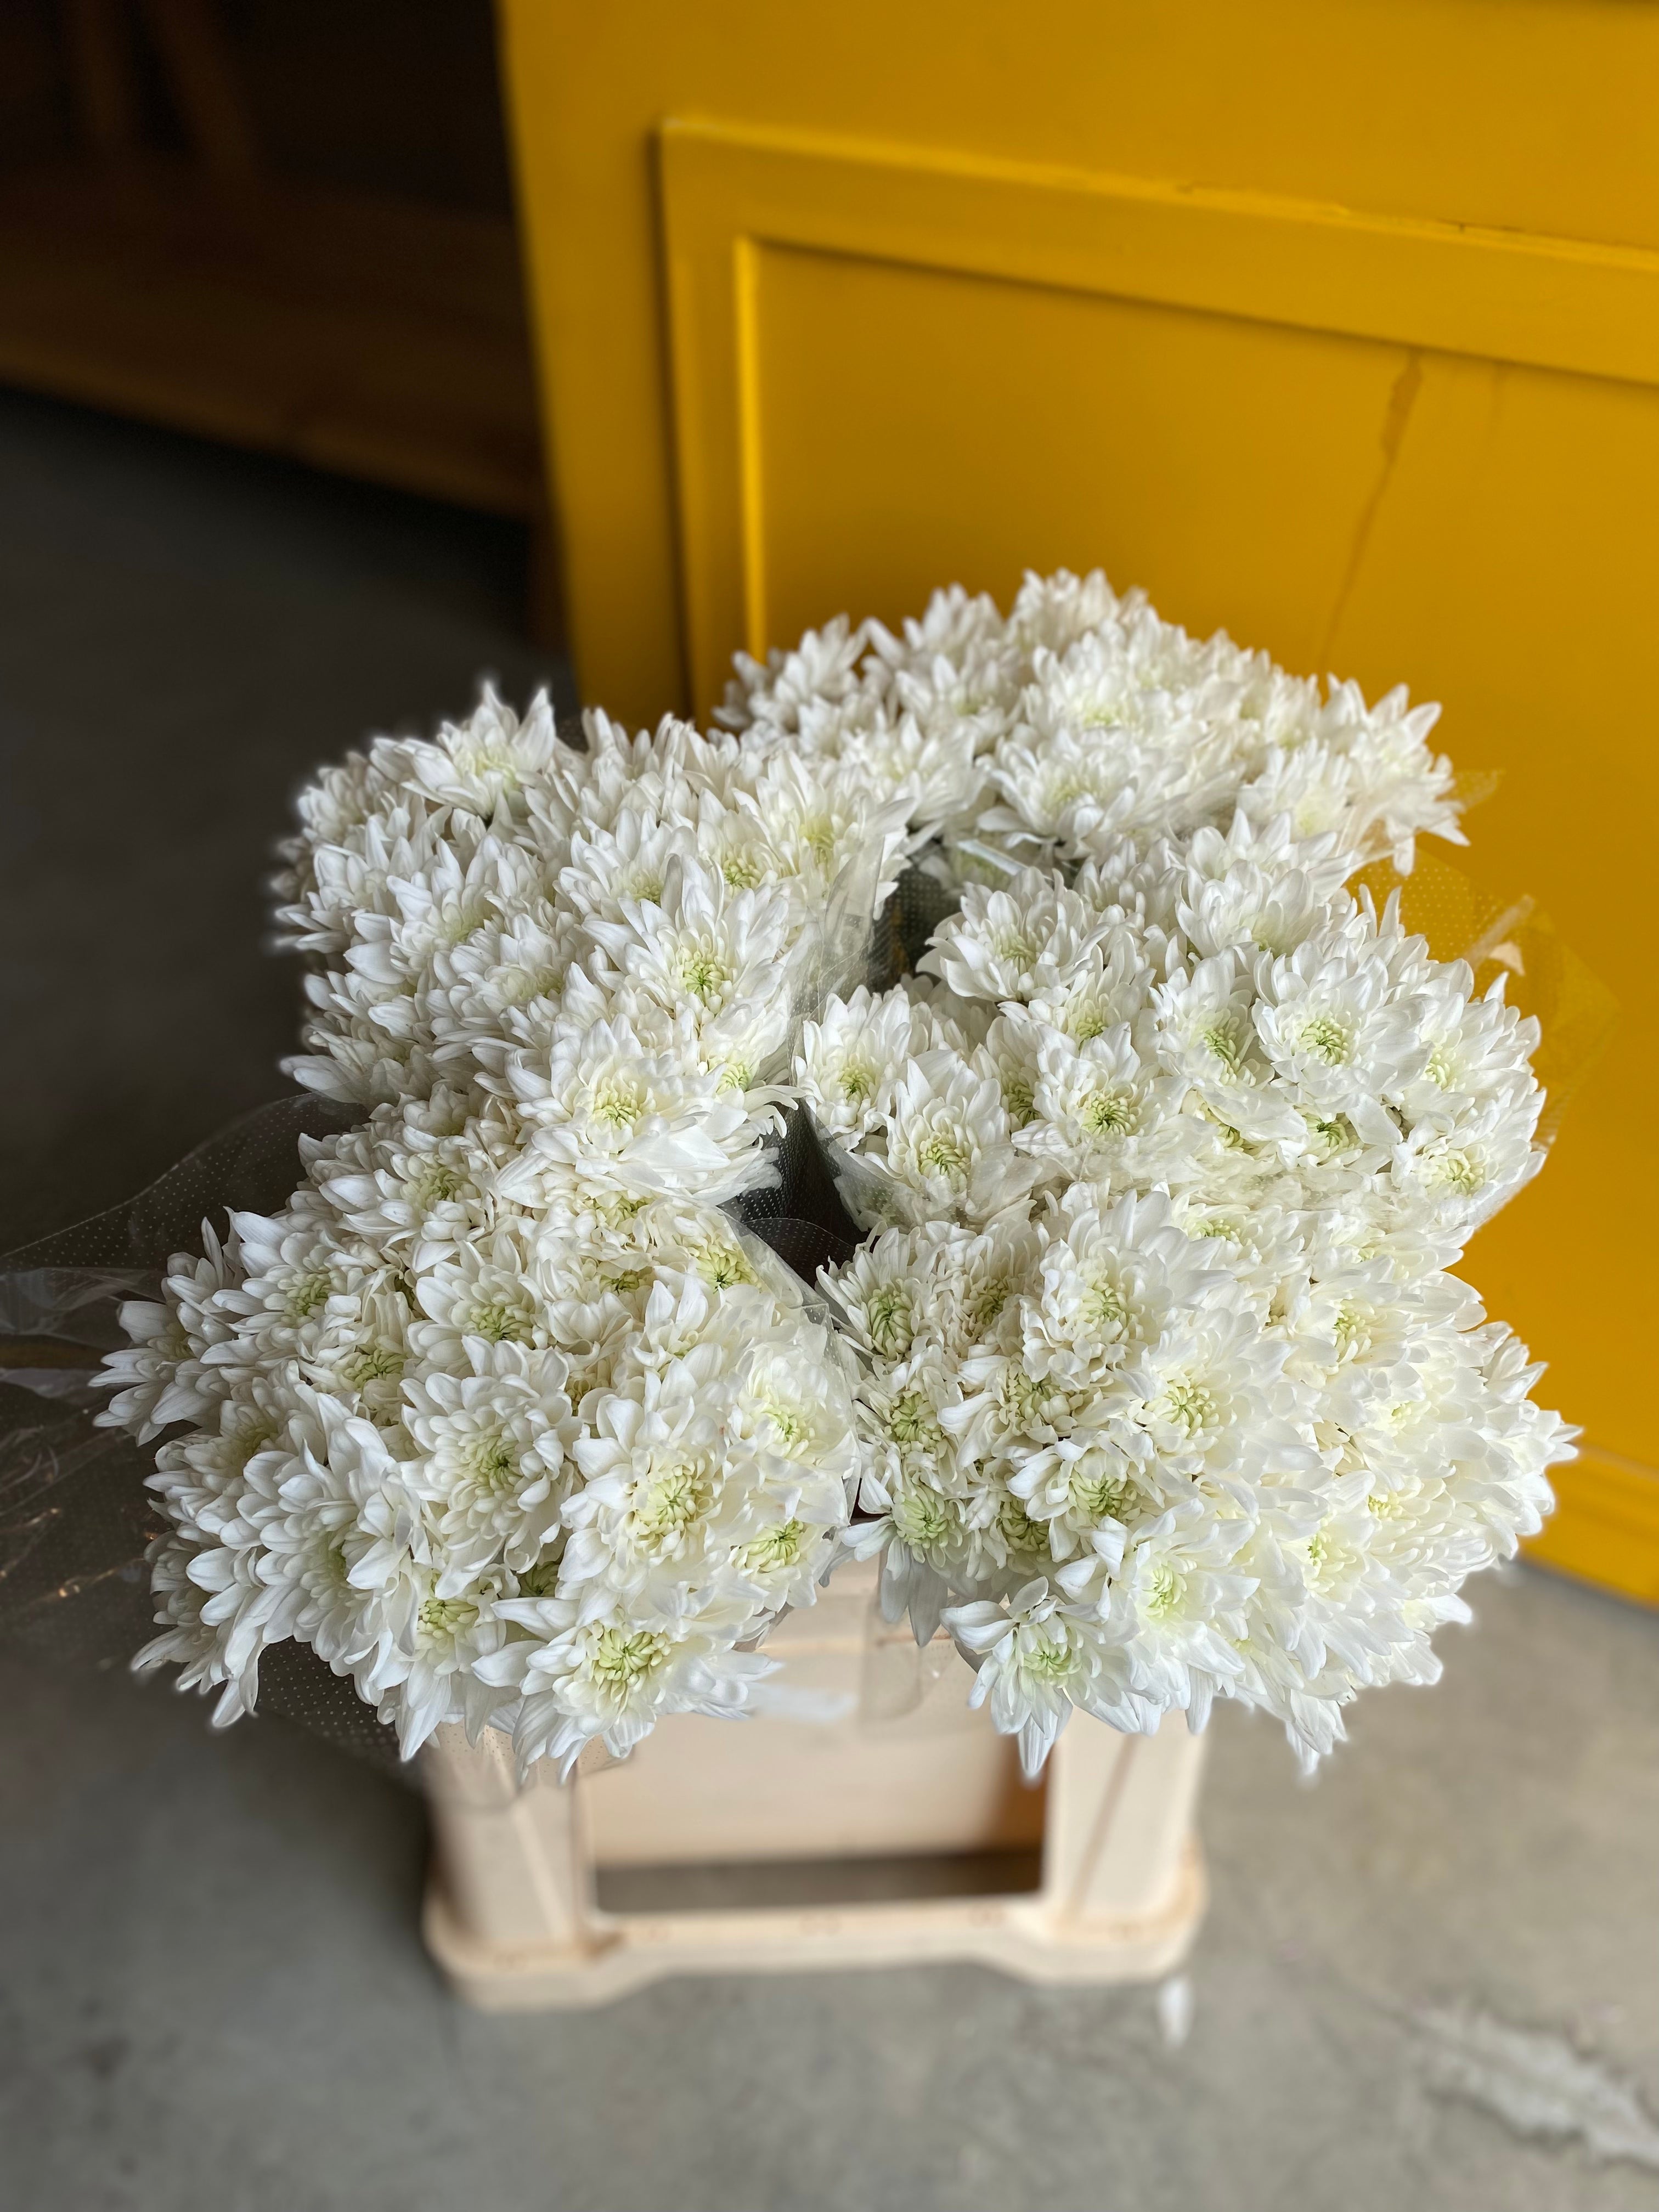 Chrysanthemum White EG كريسانثمو